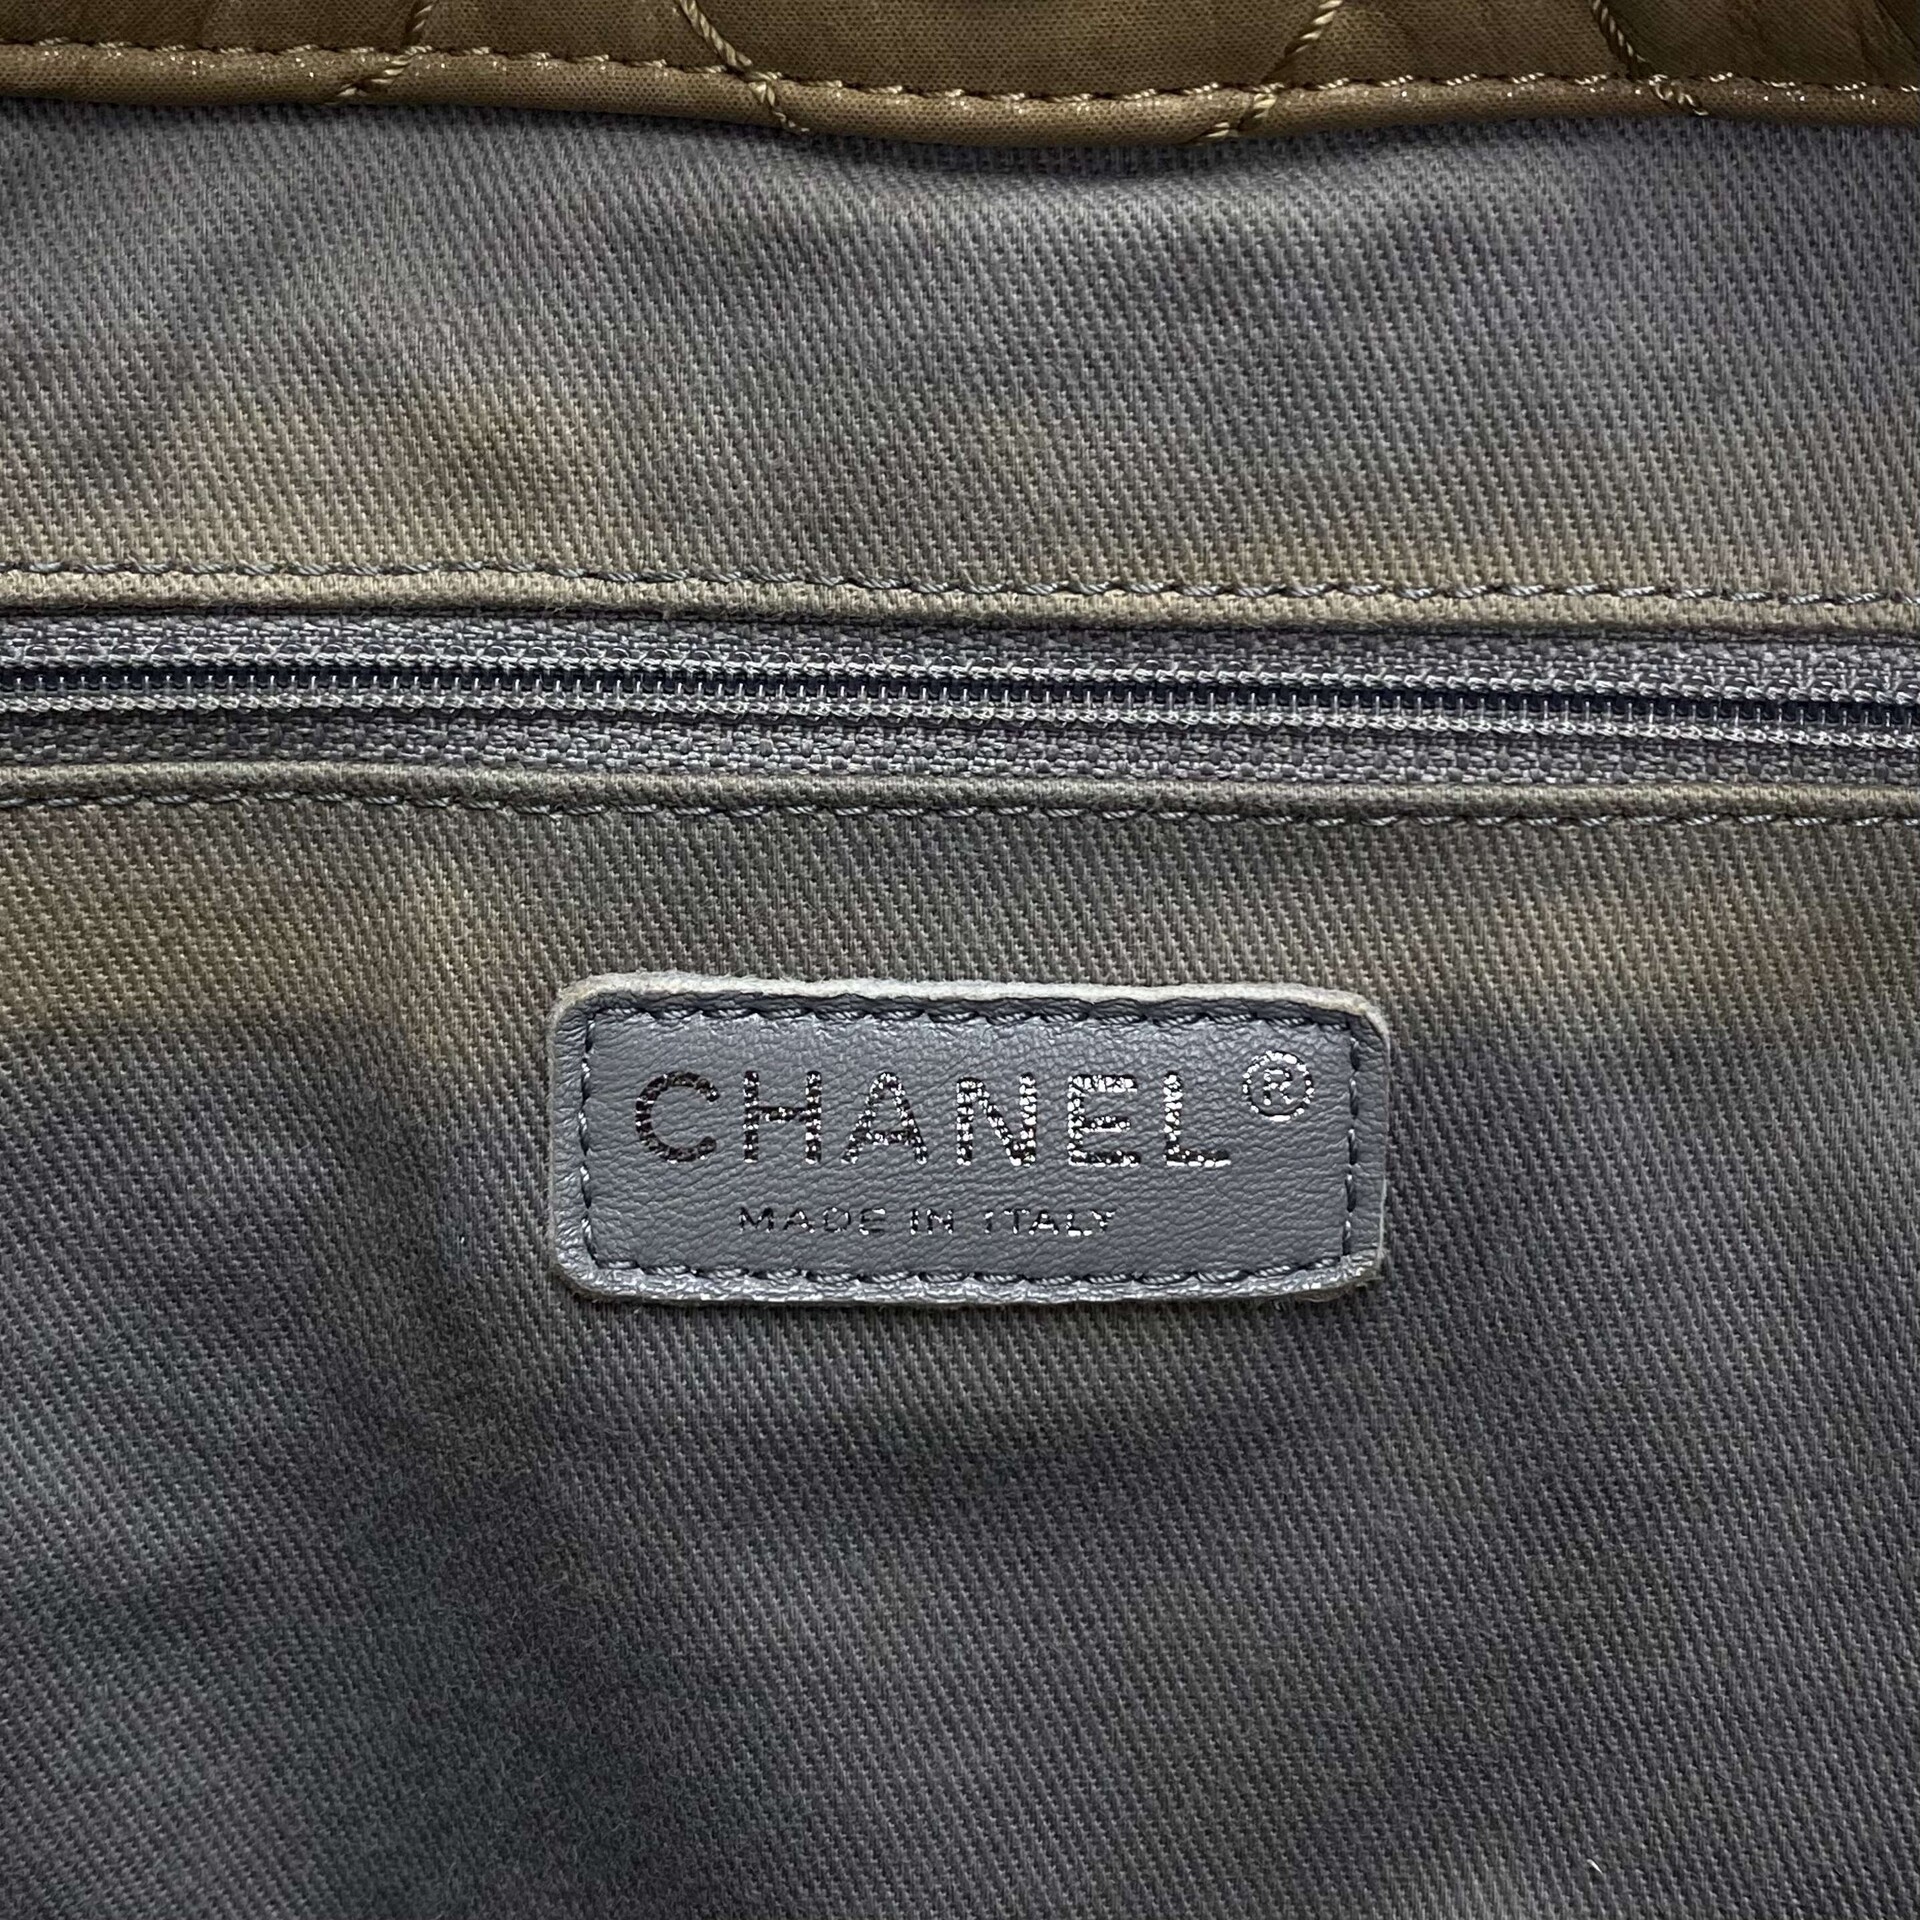 Bolsa Chanel Couro Bege